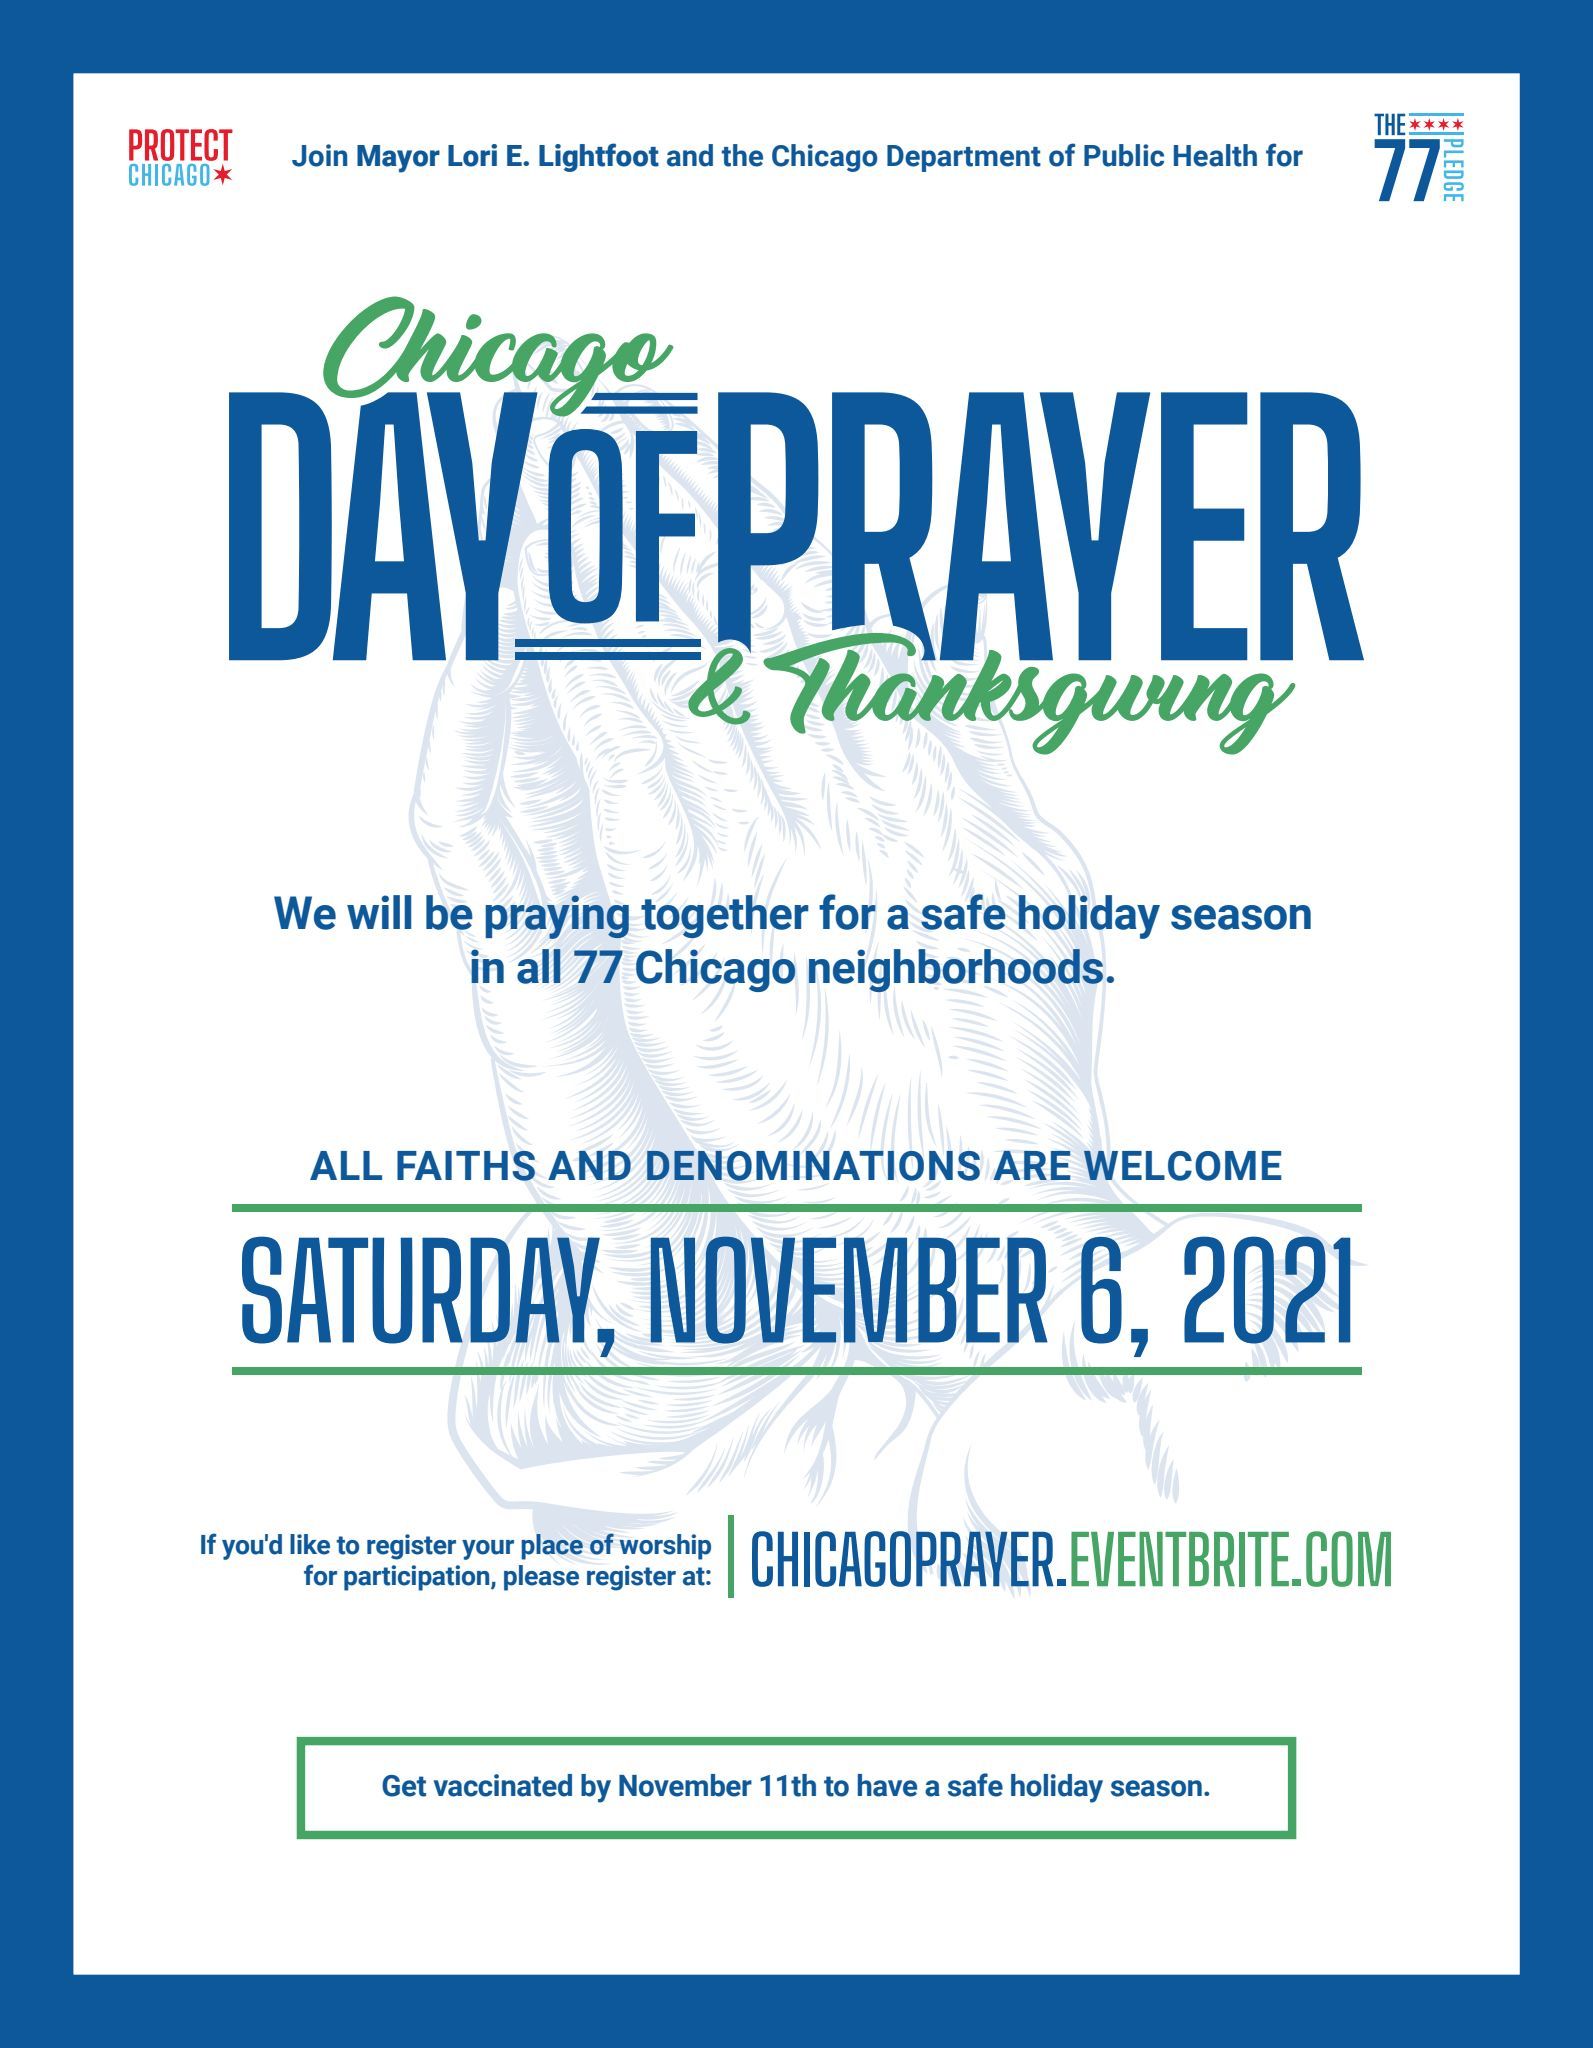 Chicago Day of Prayer & Thanksgiving